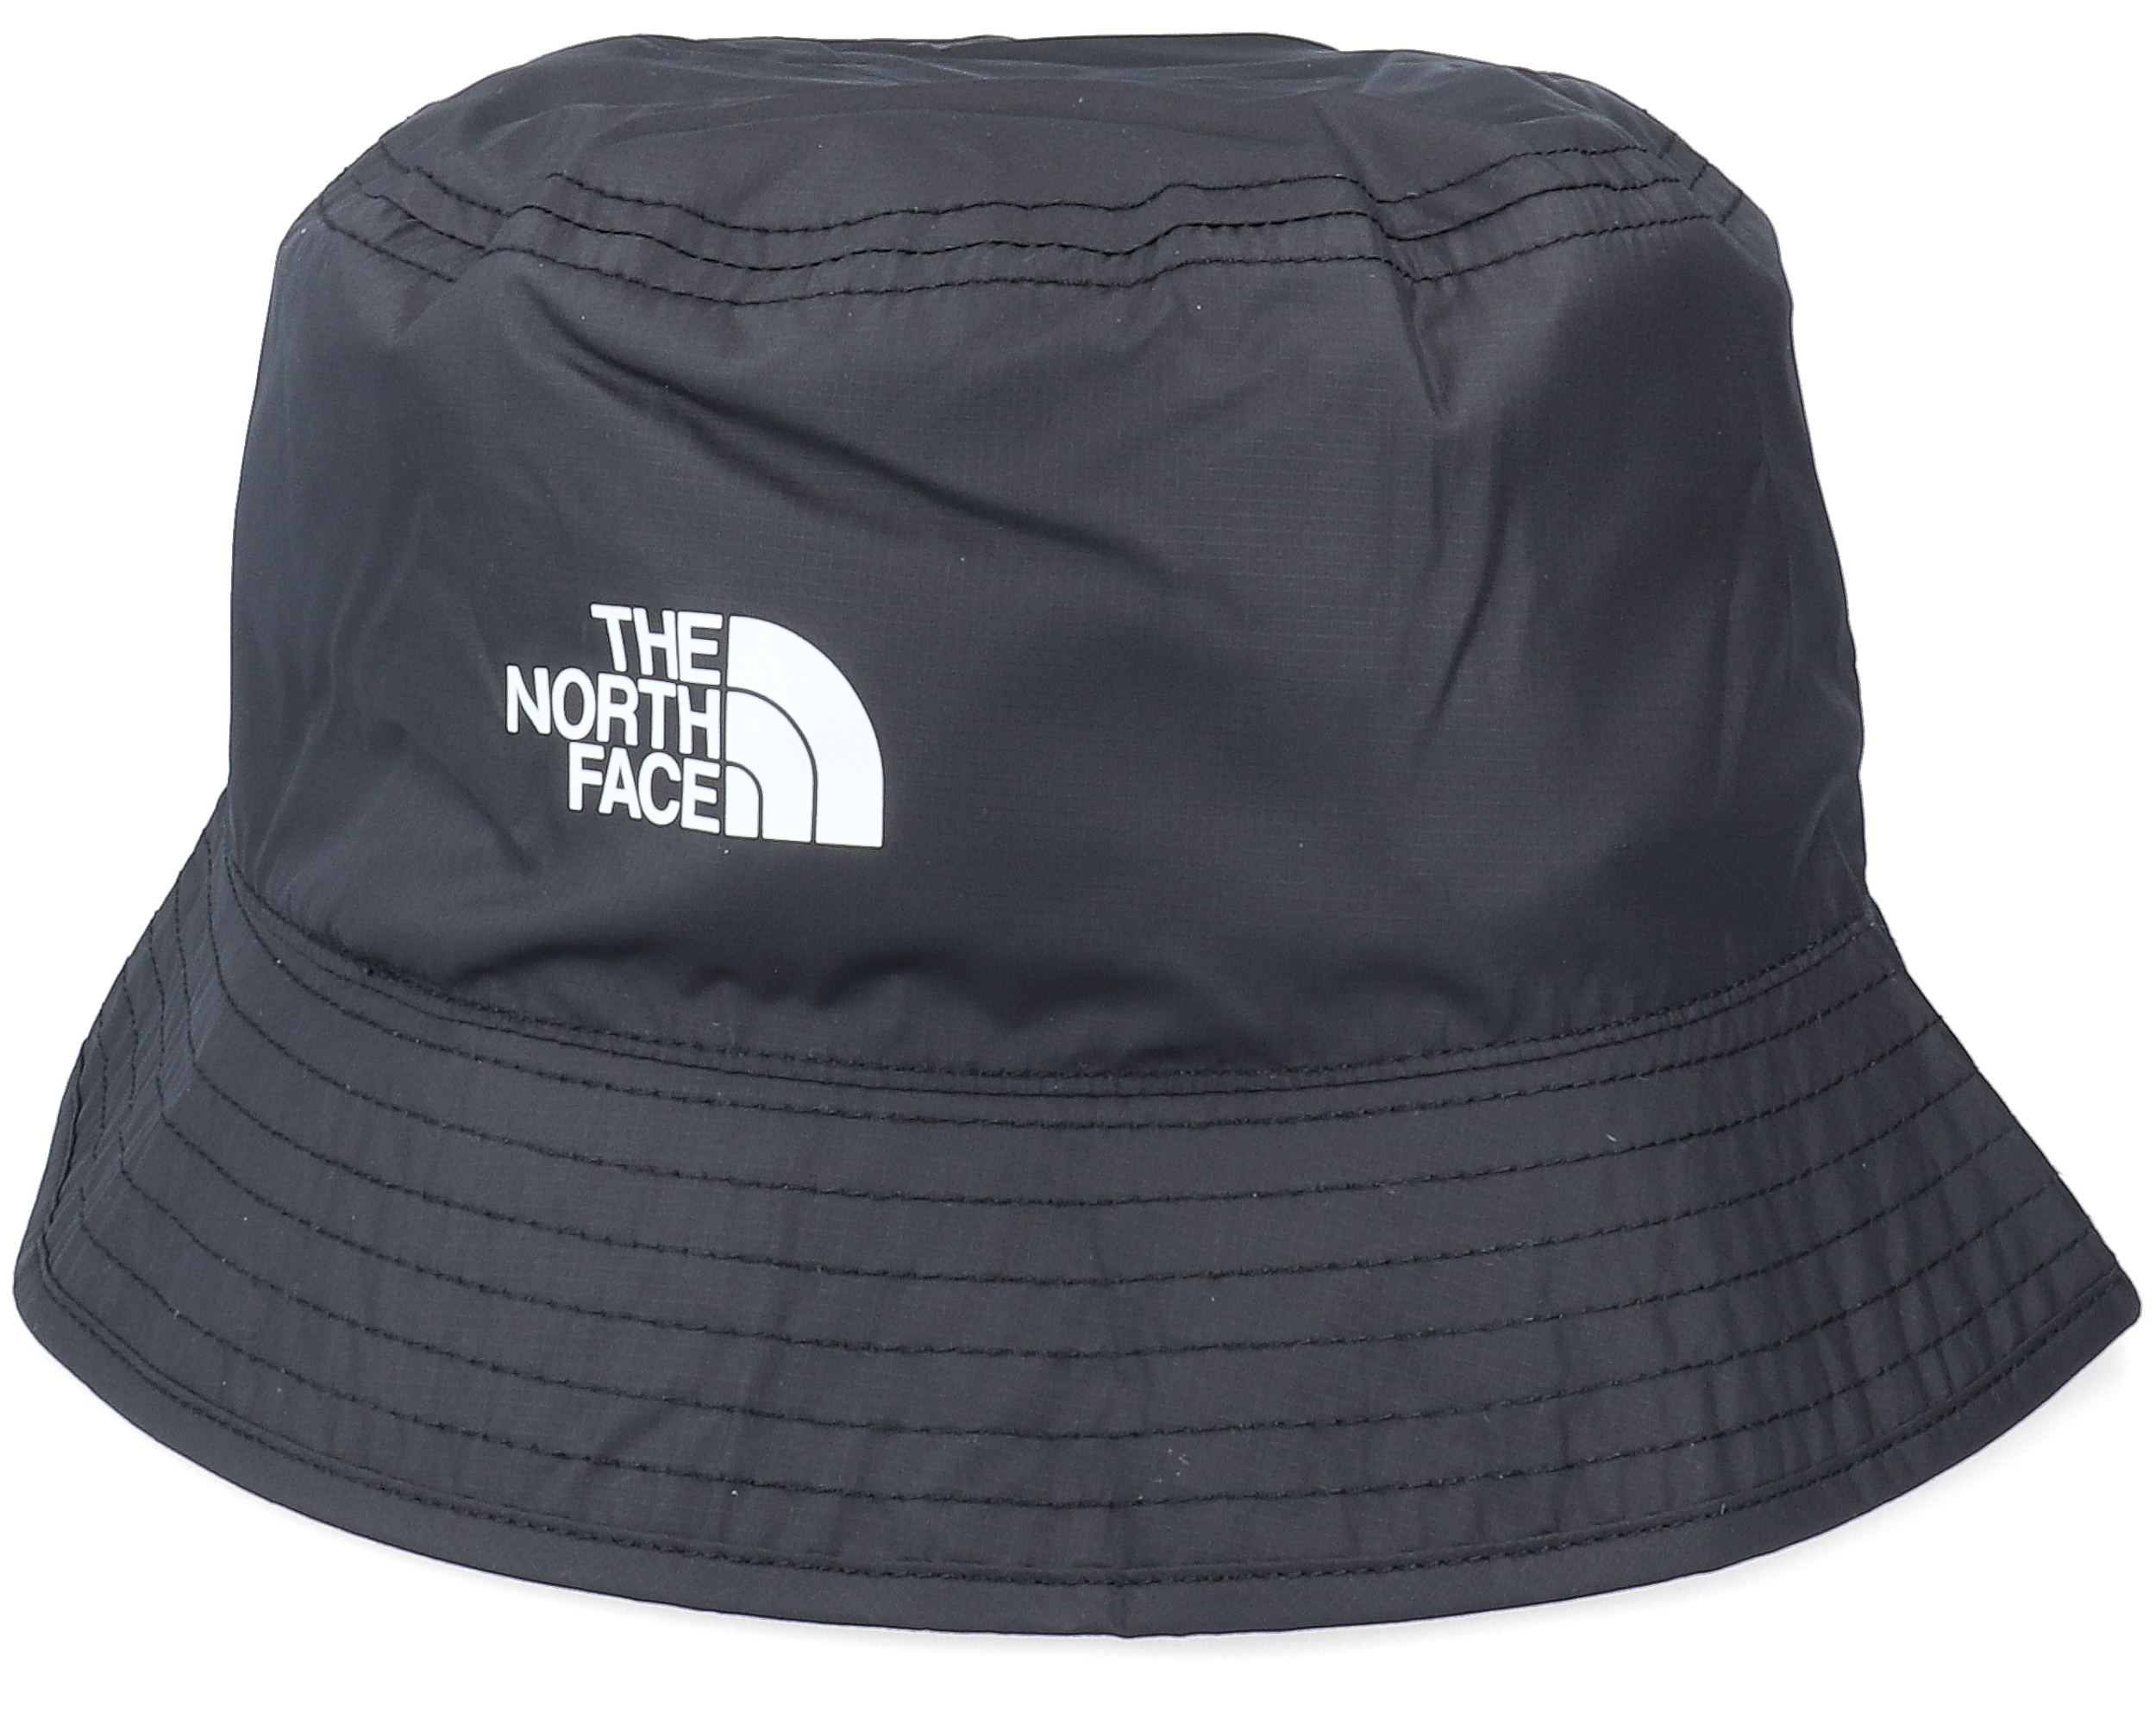 The North Face Black Sun Stash Hat